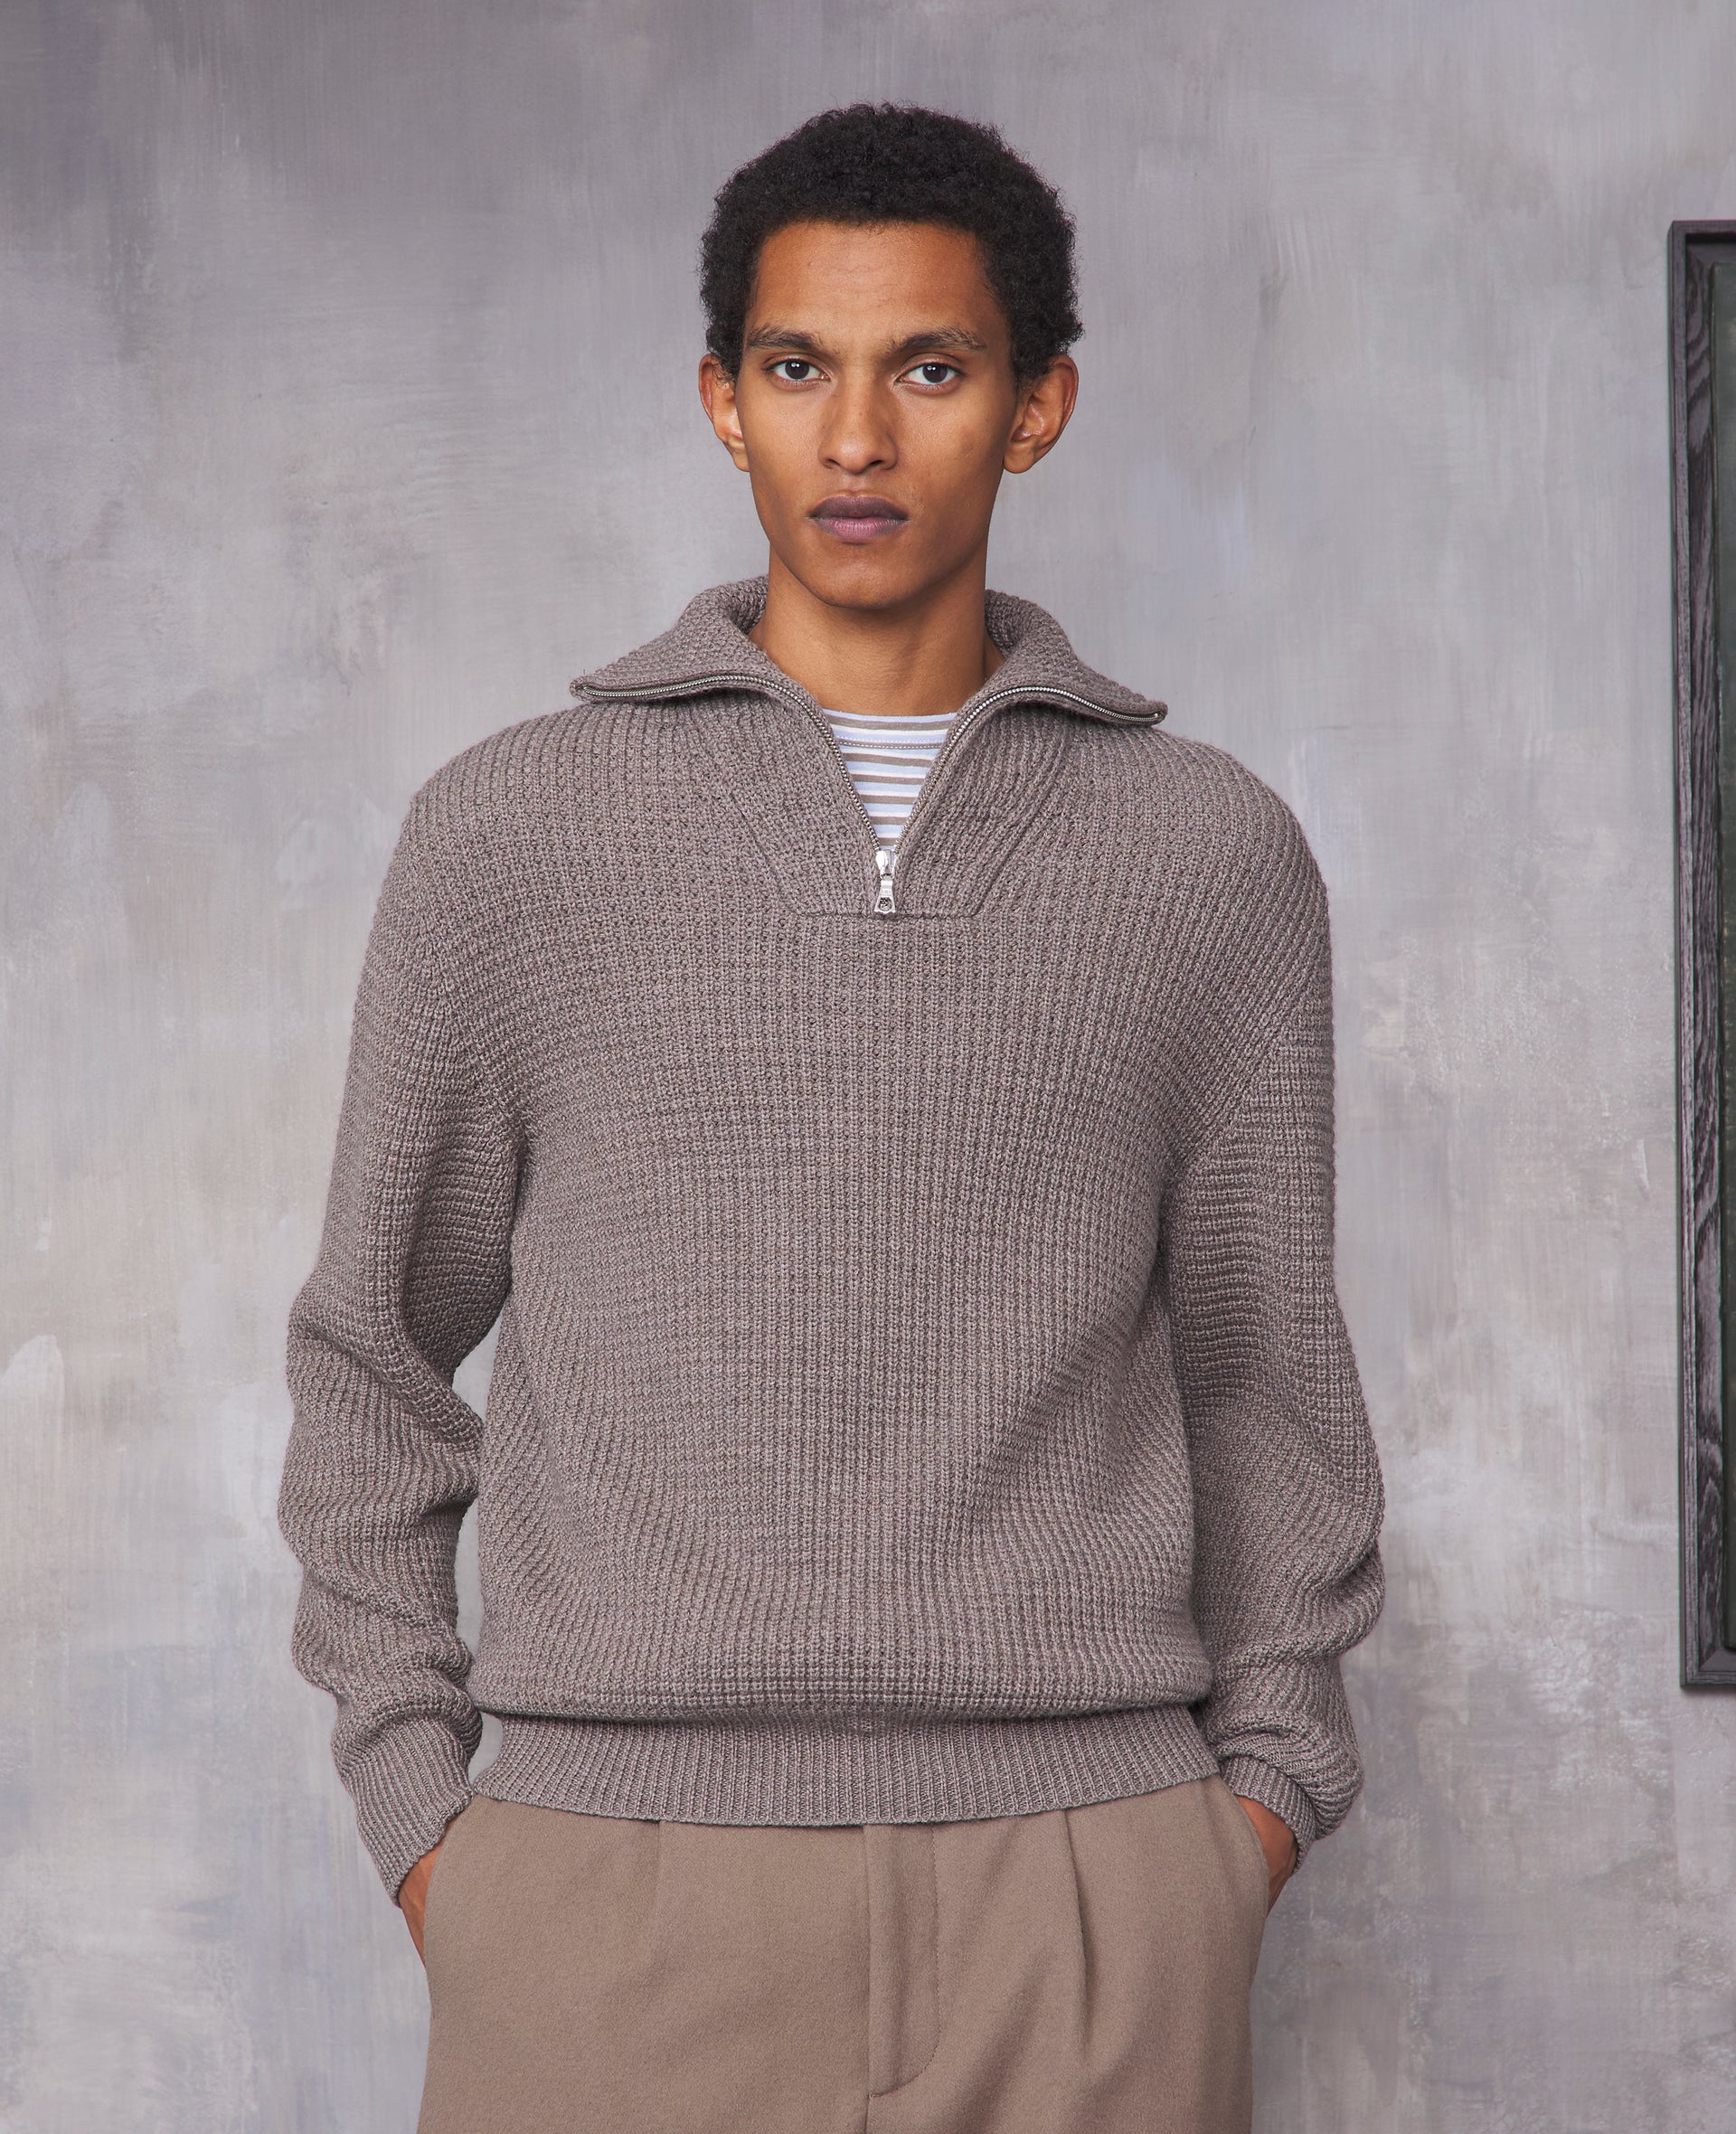 Tarek sweater - Image 3